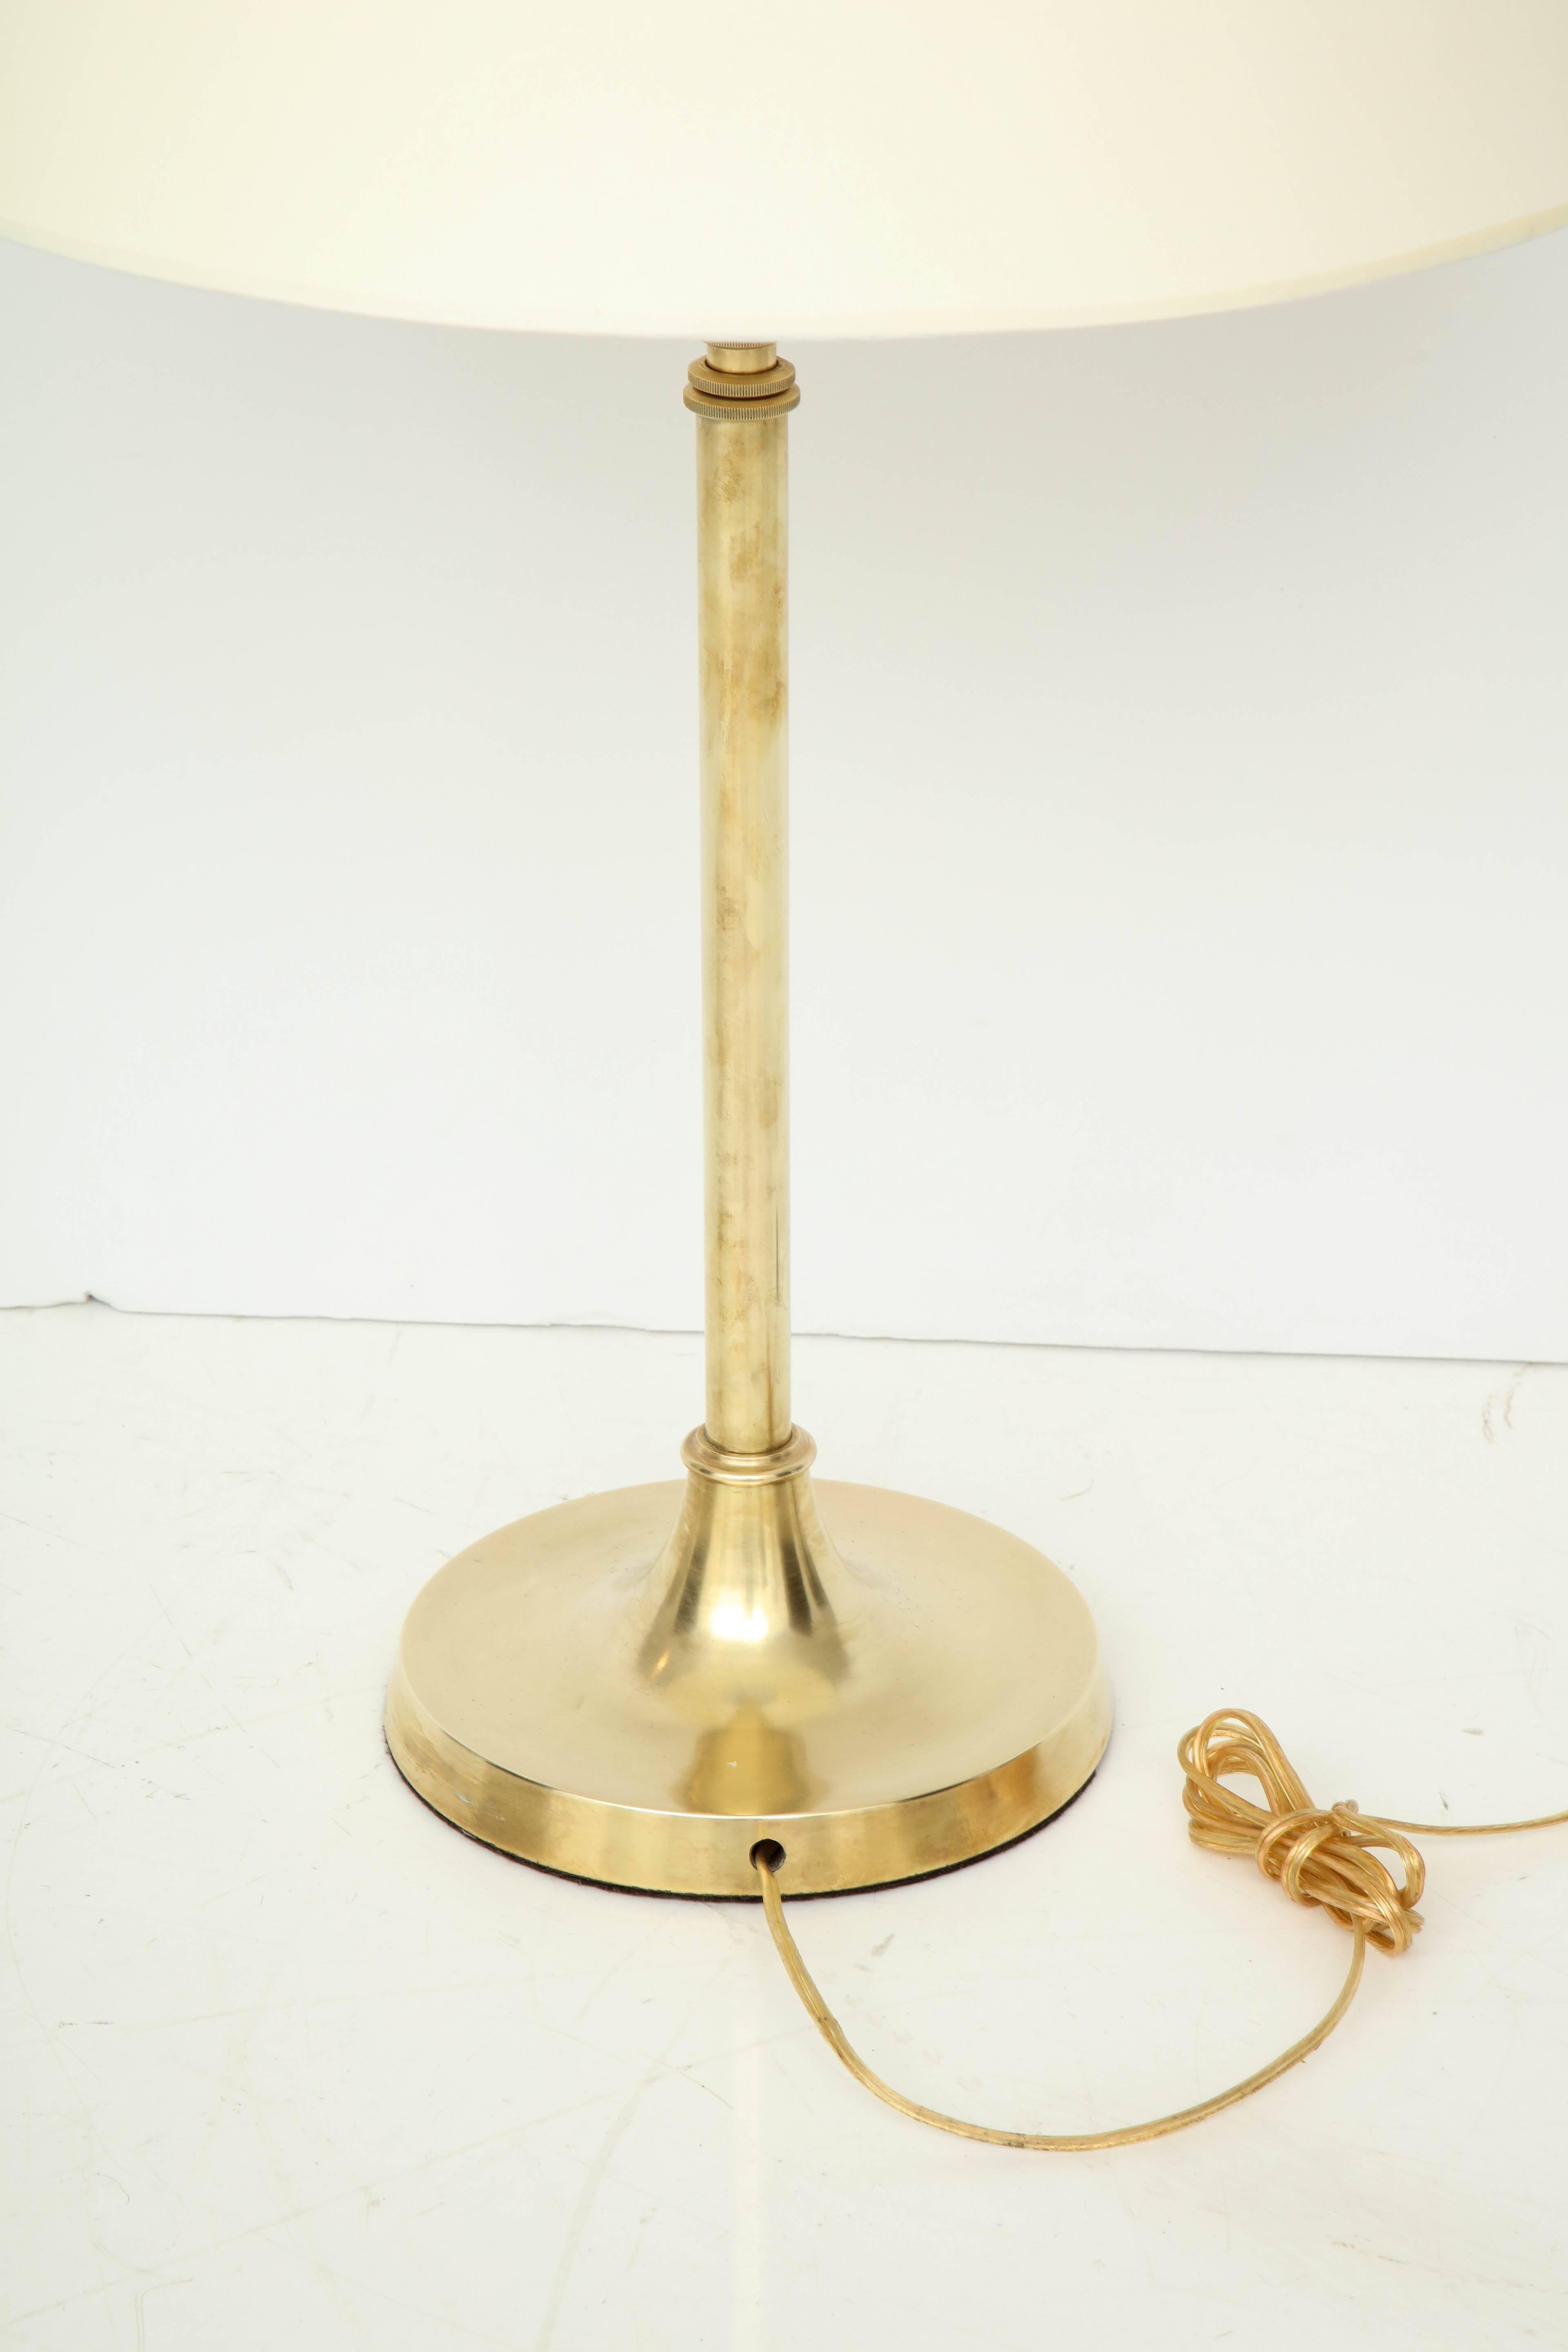 Danish Telescopic Brass Table or Floor Lamp, circa 1940s For Sale 4